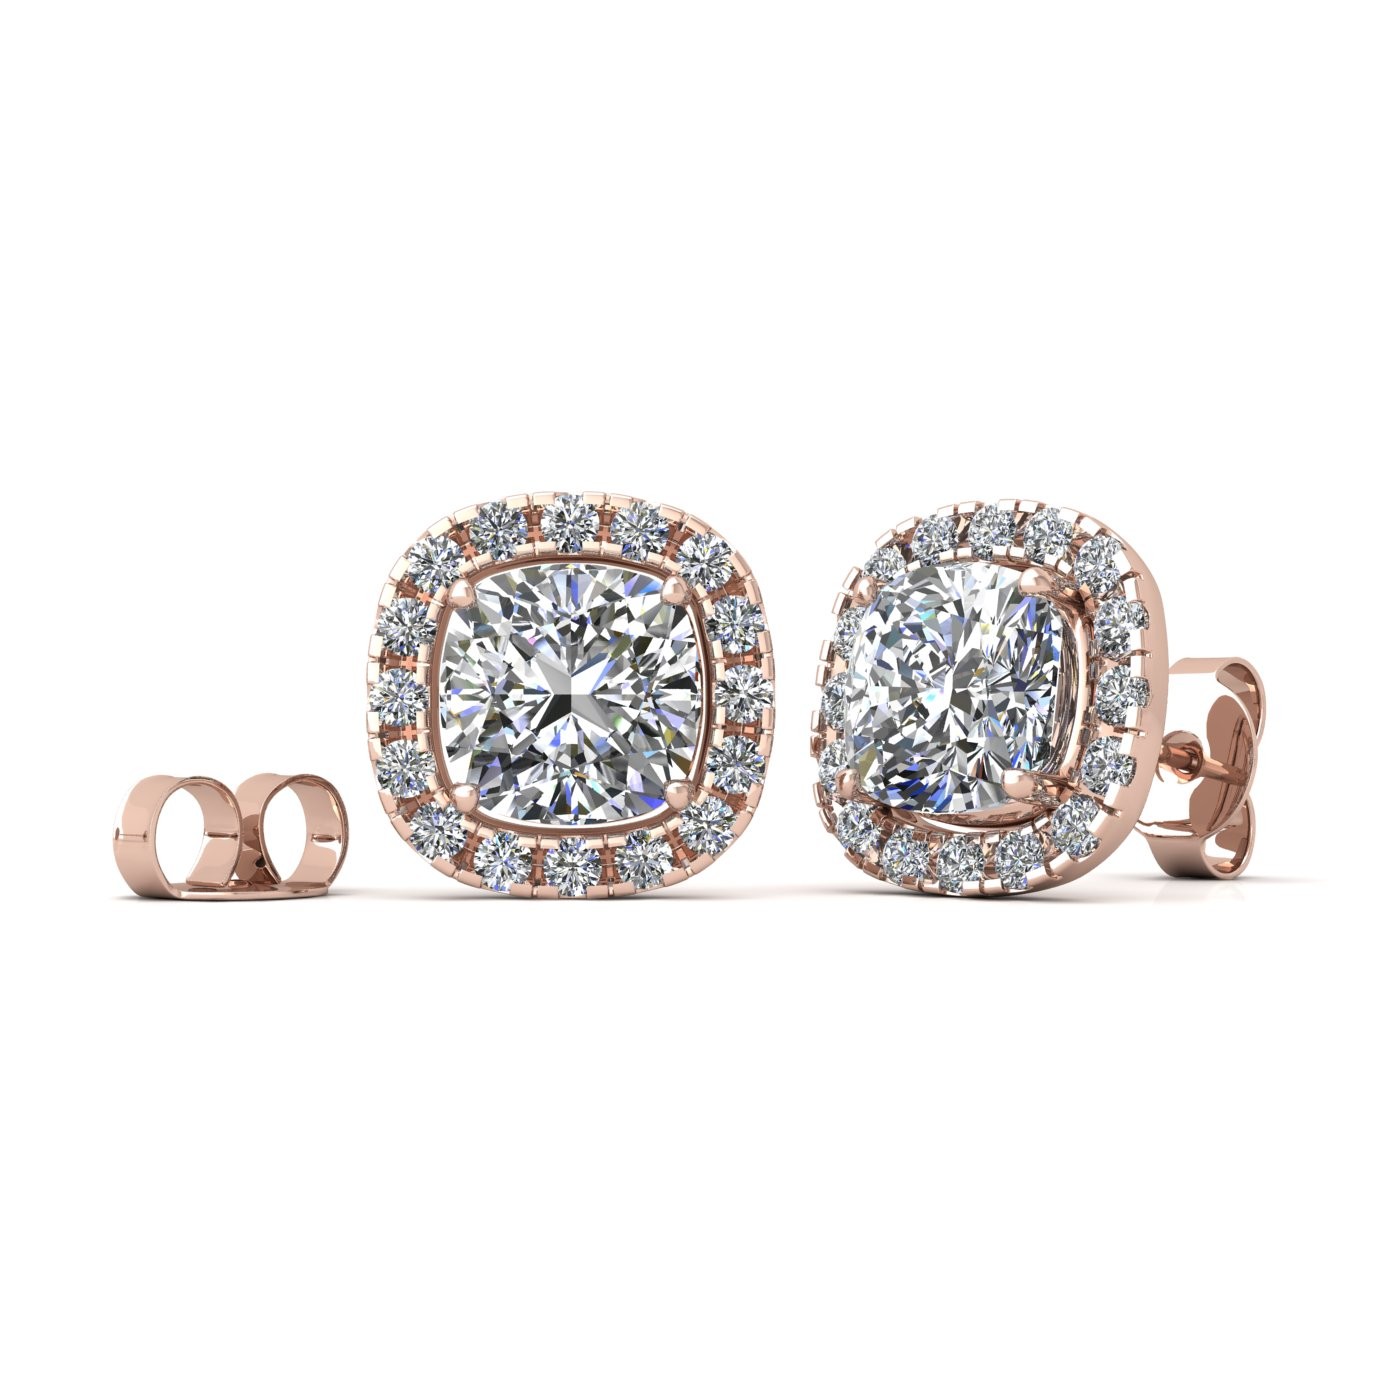 18k rose gold  0,7 ct each (1,4 tcw) 4 prongs cushion shape diamond earrings with diamond pavÉ set halo Photos & images